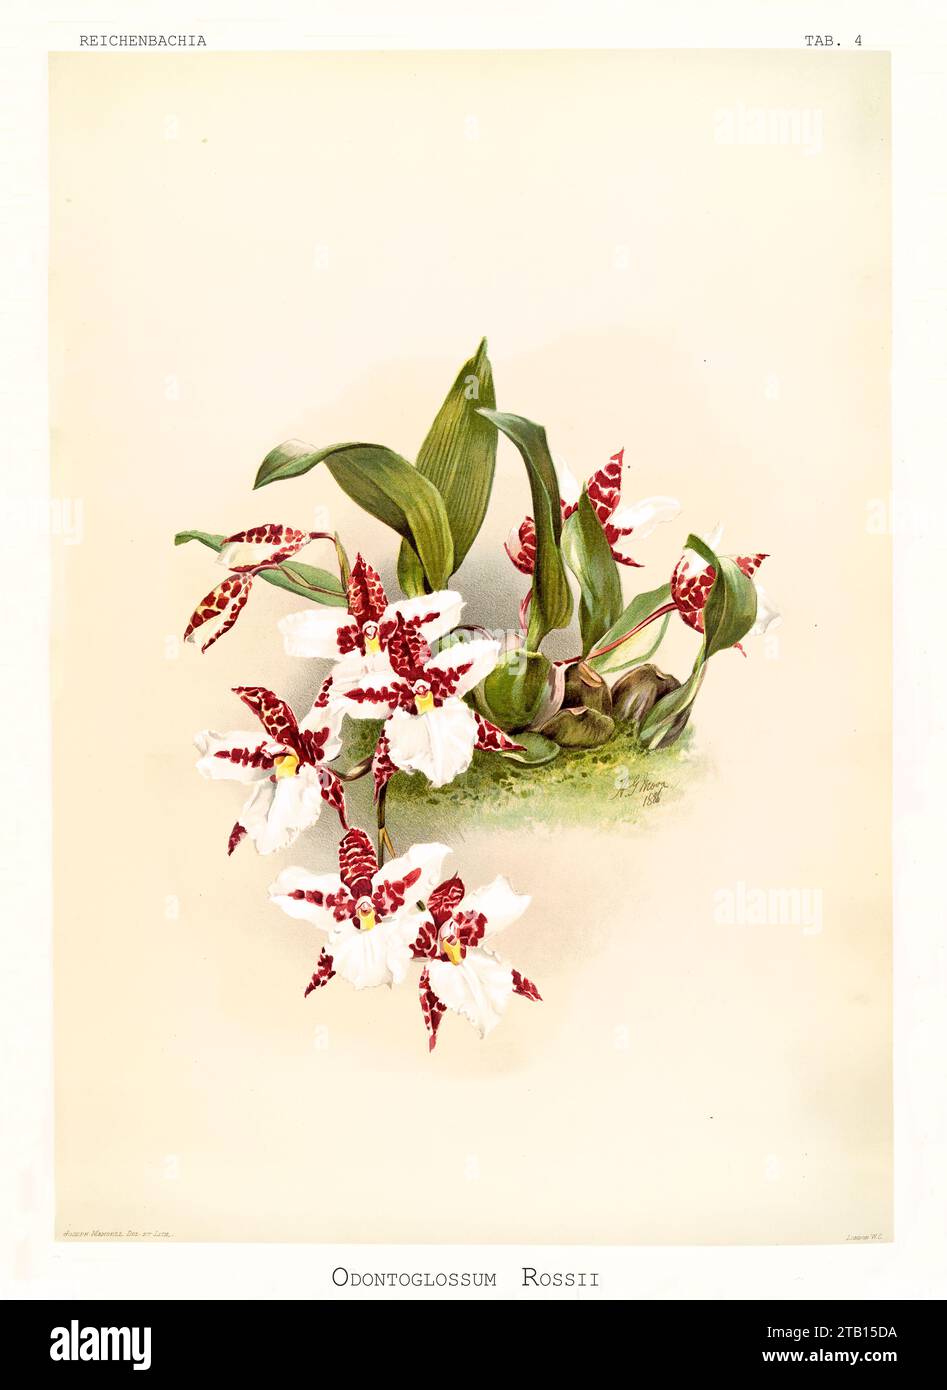 Old illustration of Ross' Rhynchostele (Rhynchostele Rossii ). Reichenbachia, by F. Sander. St. Albans, UK, 1888 - 1894 Stock Photo